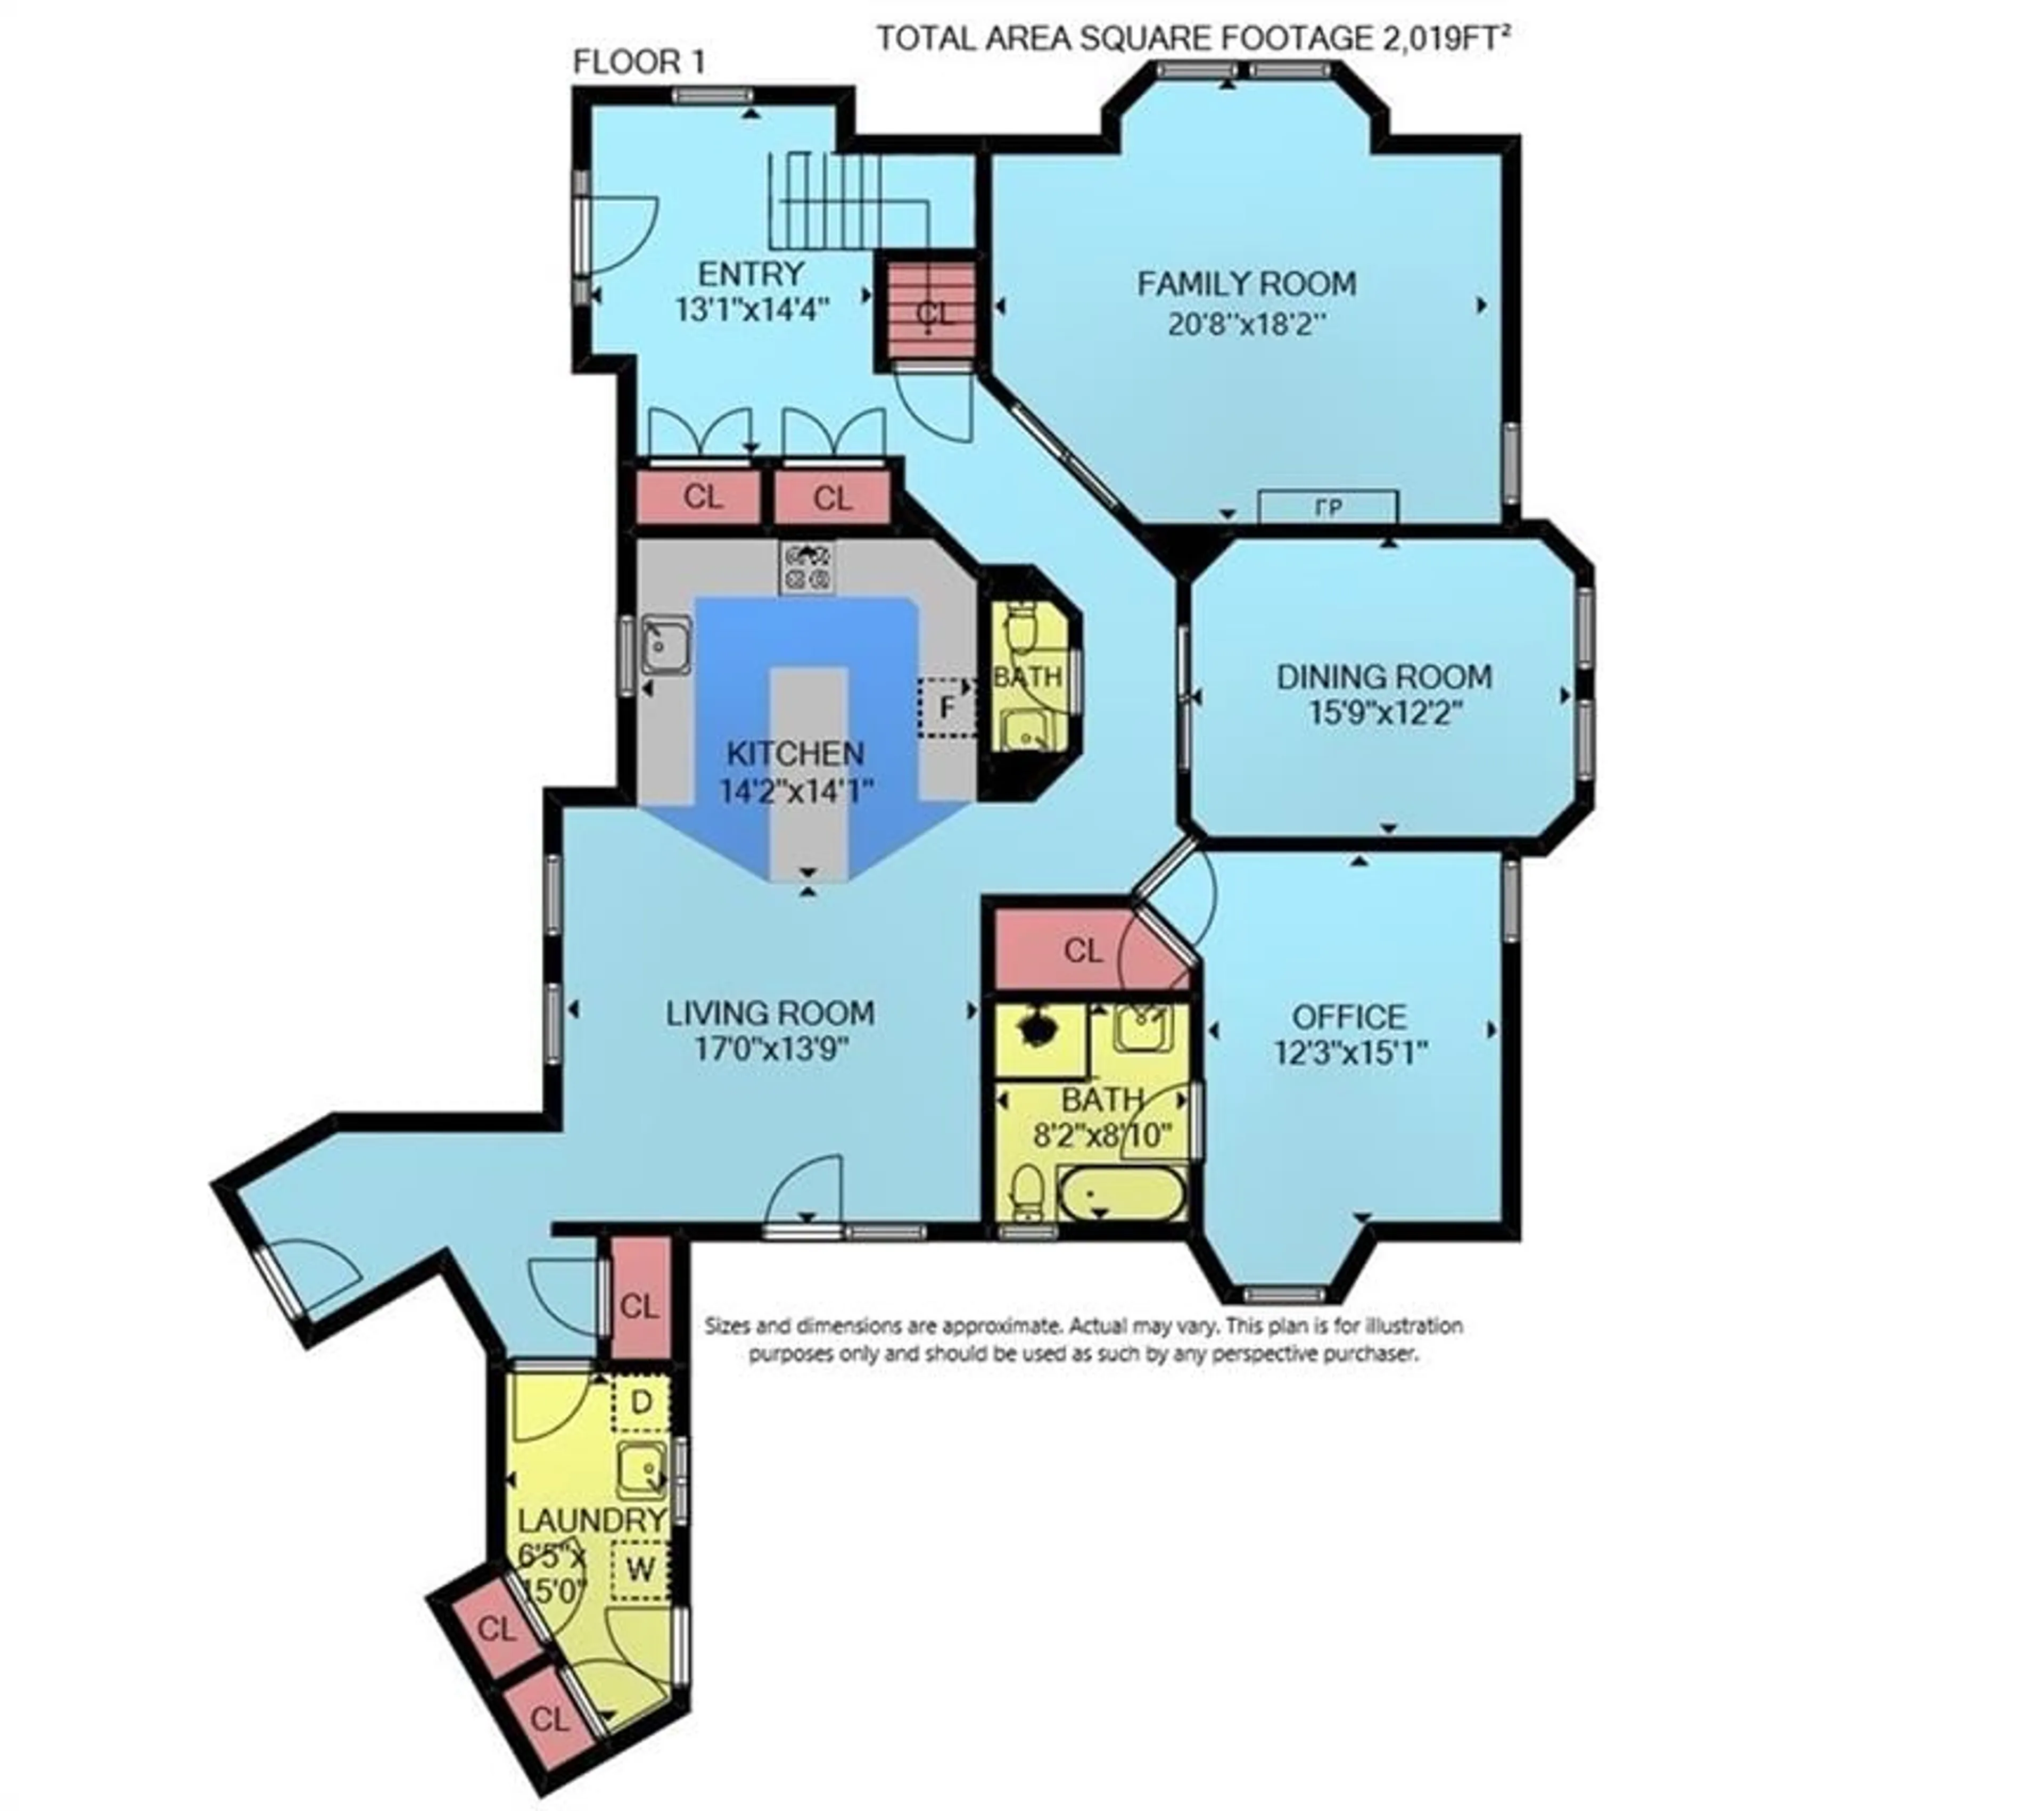 Floor plan for 515 RIDGE Rd, Grimsby Ontario L3M 0K5